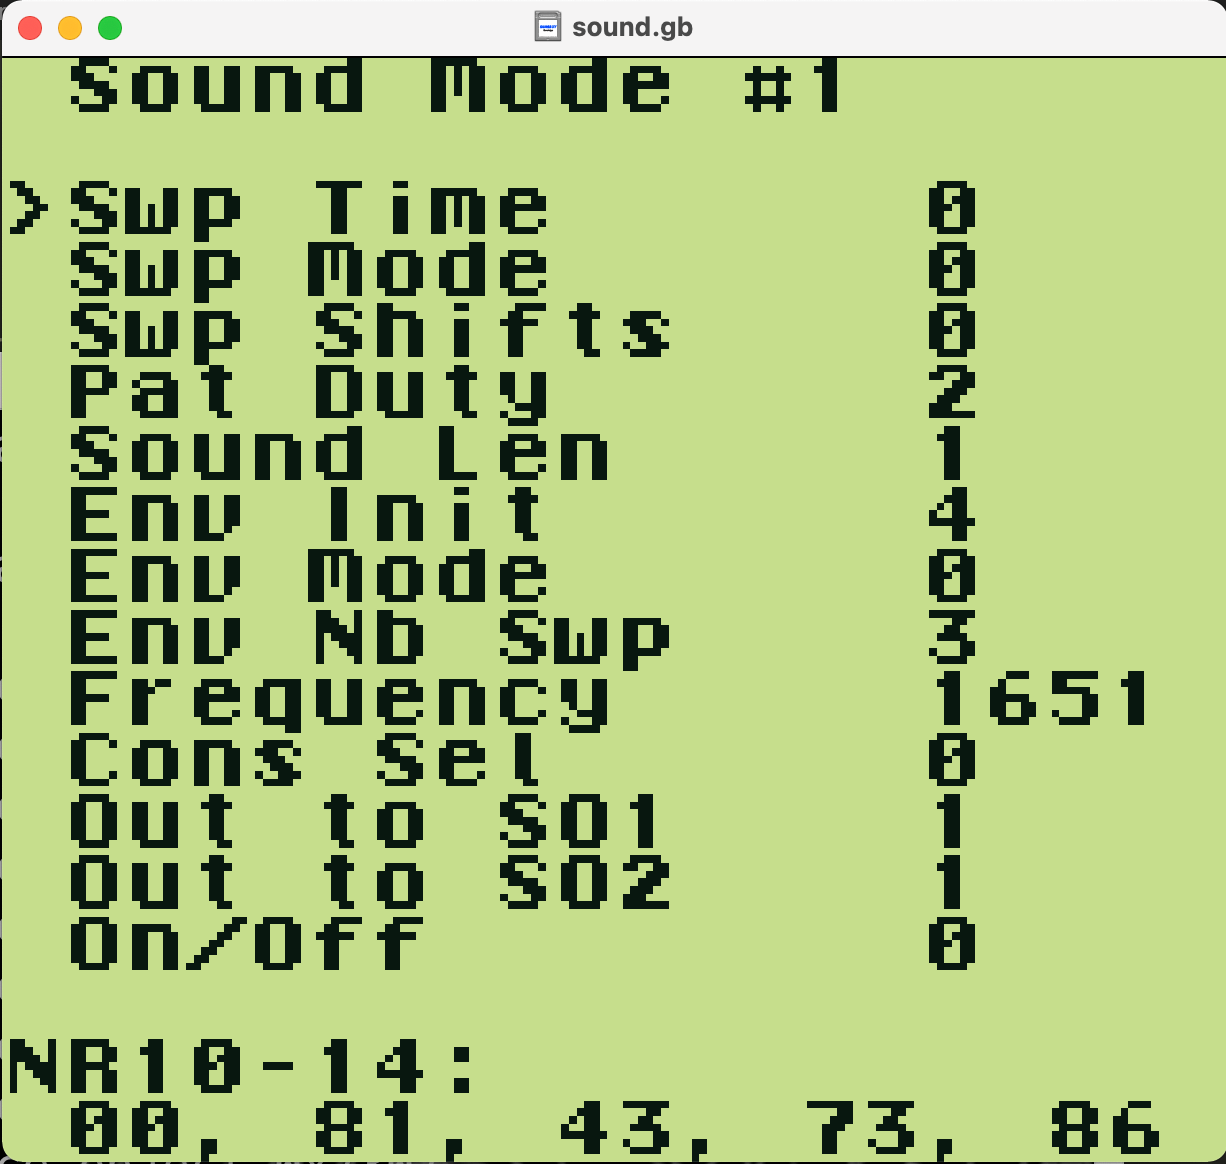 sound.gb でパラメーターをいじってブヨ〜んという音を作った。NR10-14 という各レジスタに対応した値が表示されている